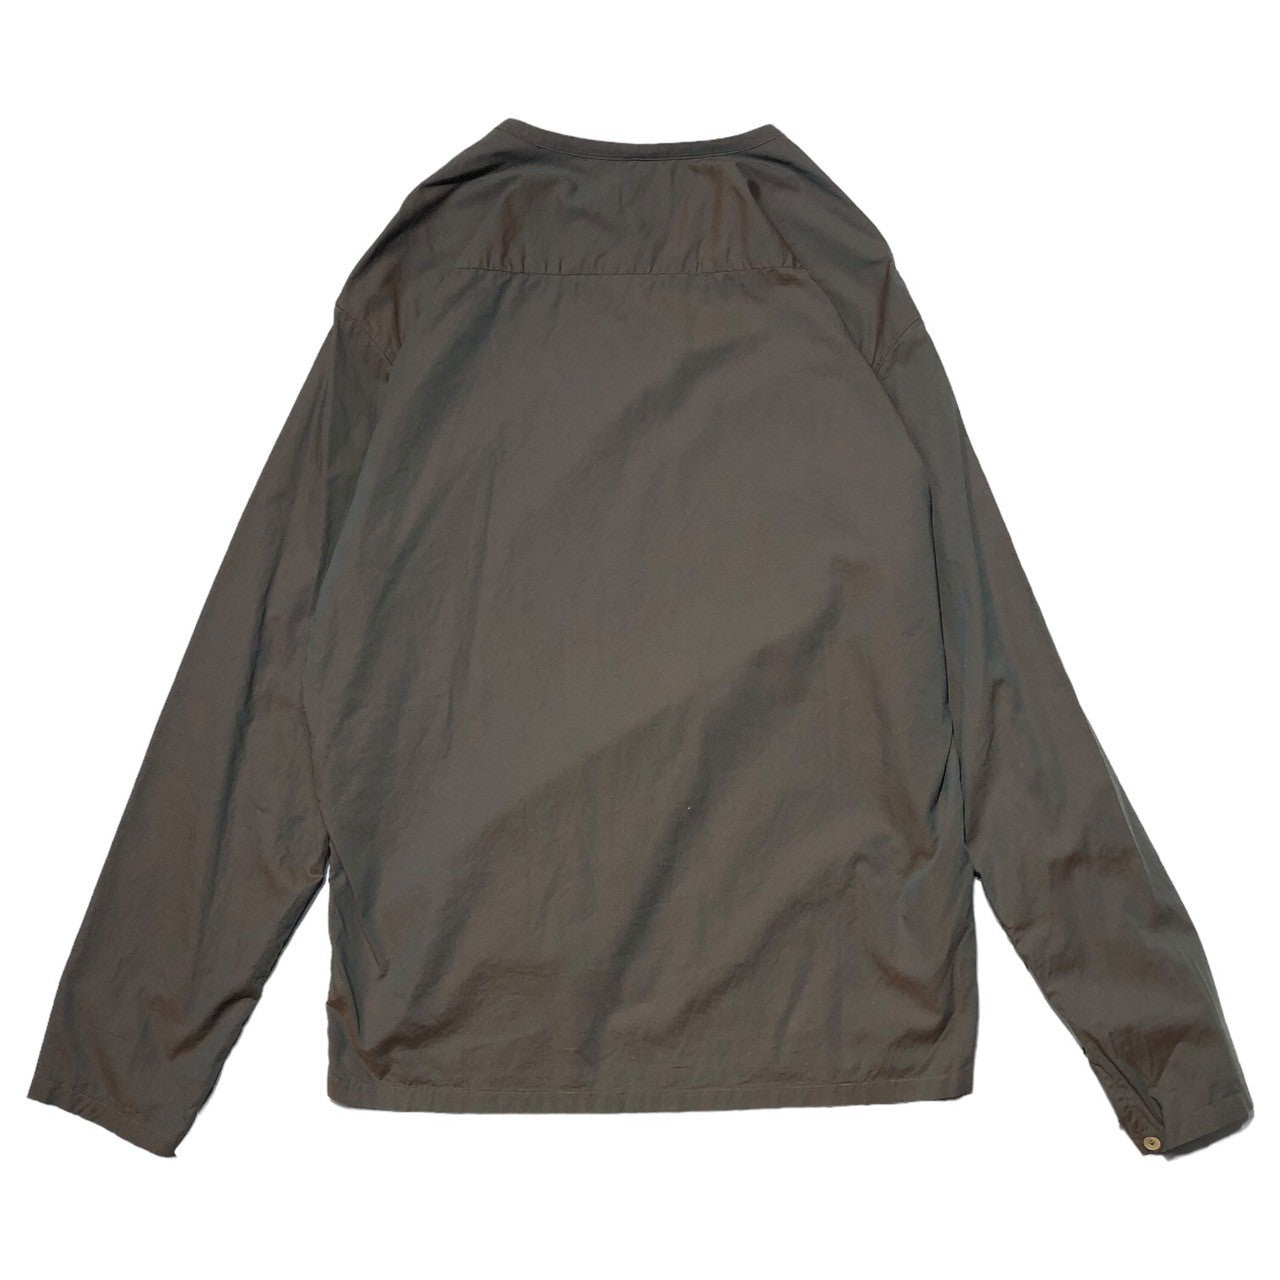 LEMAIRE(ルメール) collarless pullover shirt ノーカラープルオーバーシャツ M 183 TO121 LF276 M カーキ系